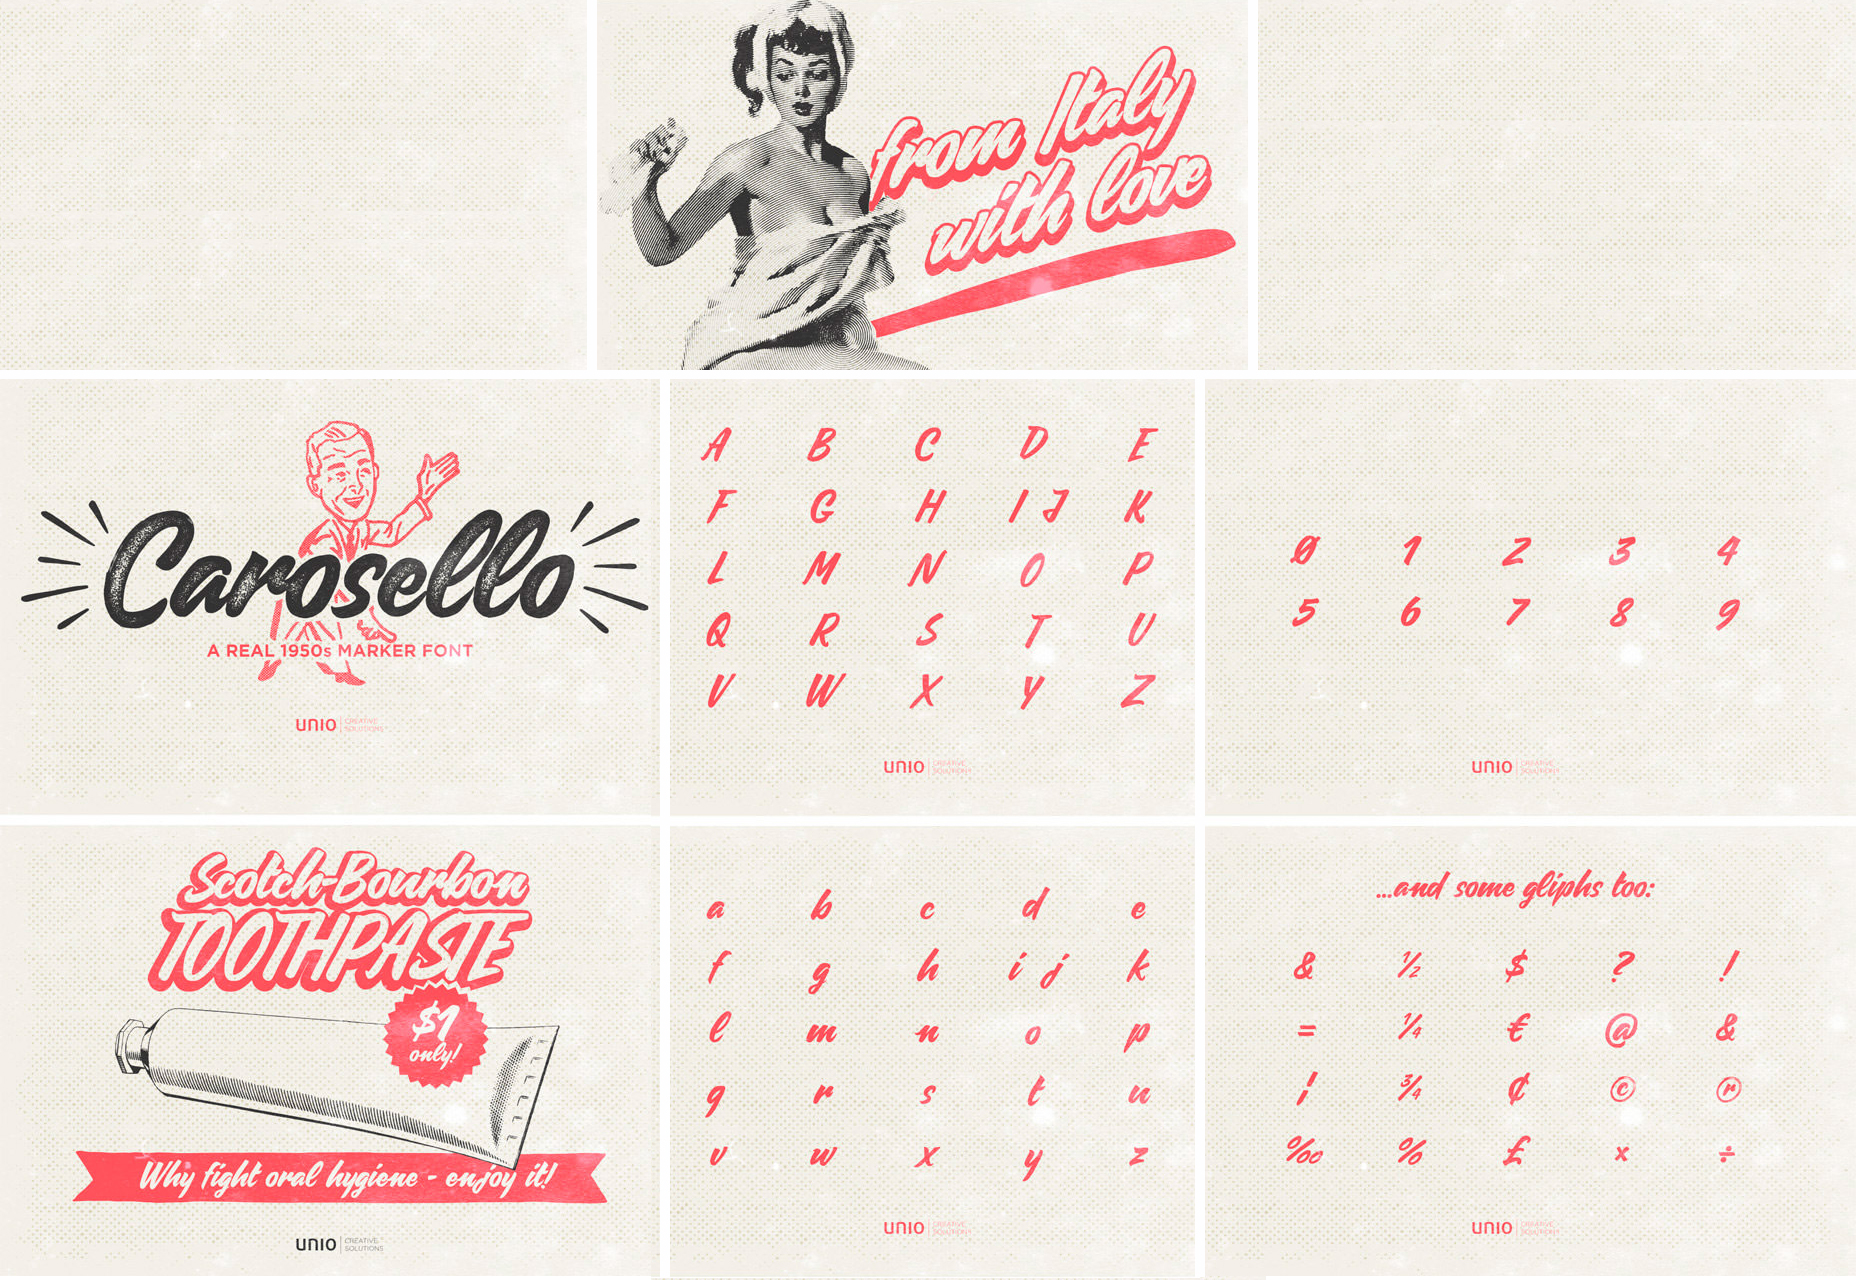 carosello-vintage-50s-style-poster-script-font